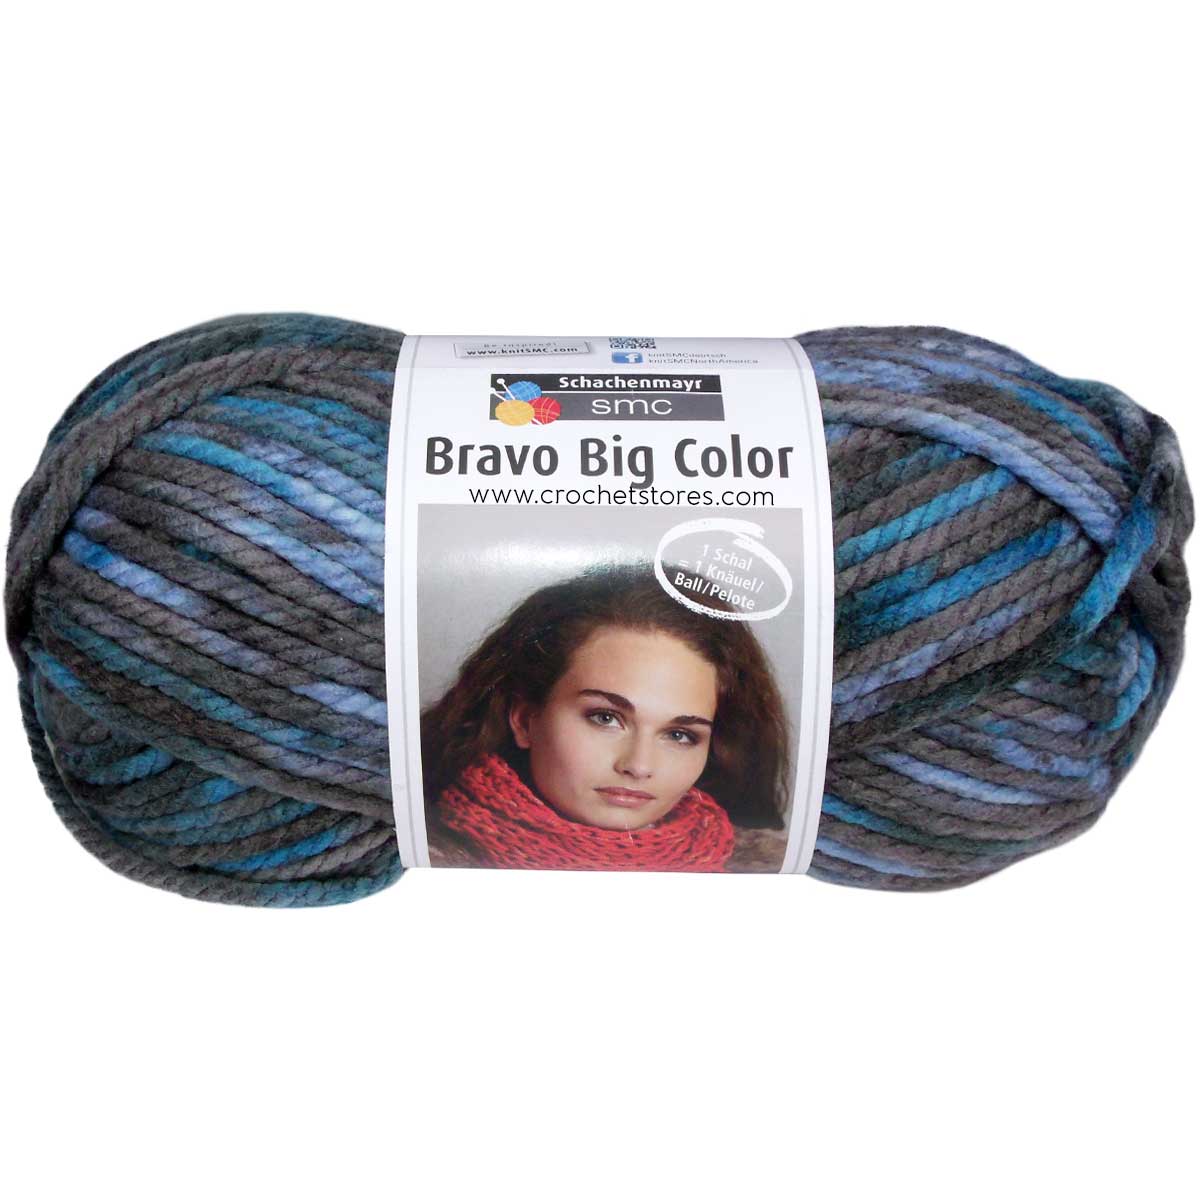 BRAVO BIG COLOR - Crochetstores9807720-894082700932795